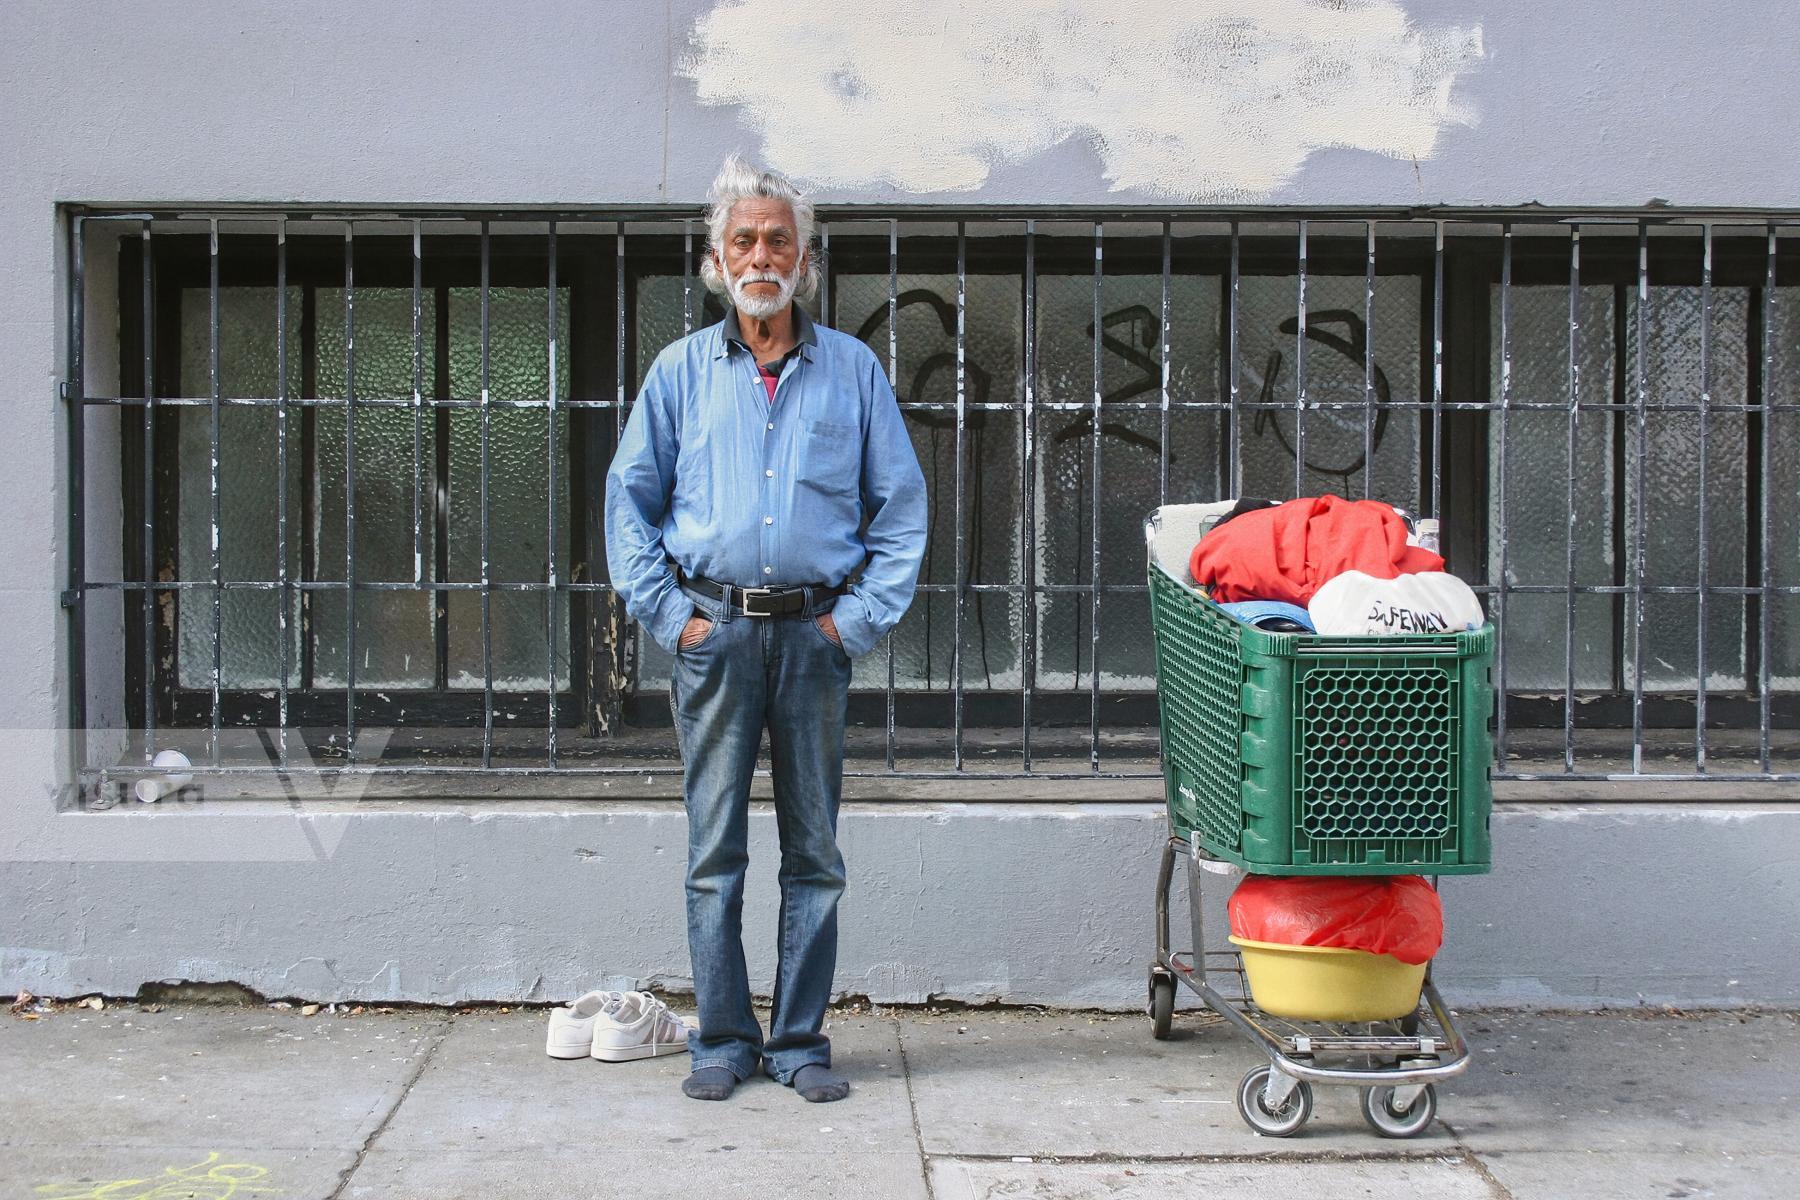 Purchase San Francisco's HomeLess by Antonio Boalis